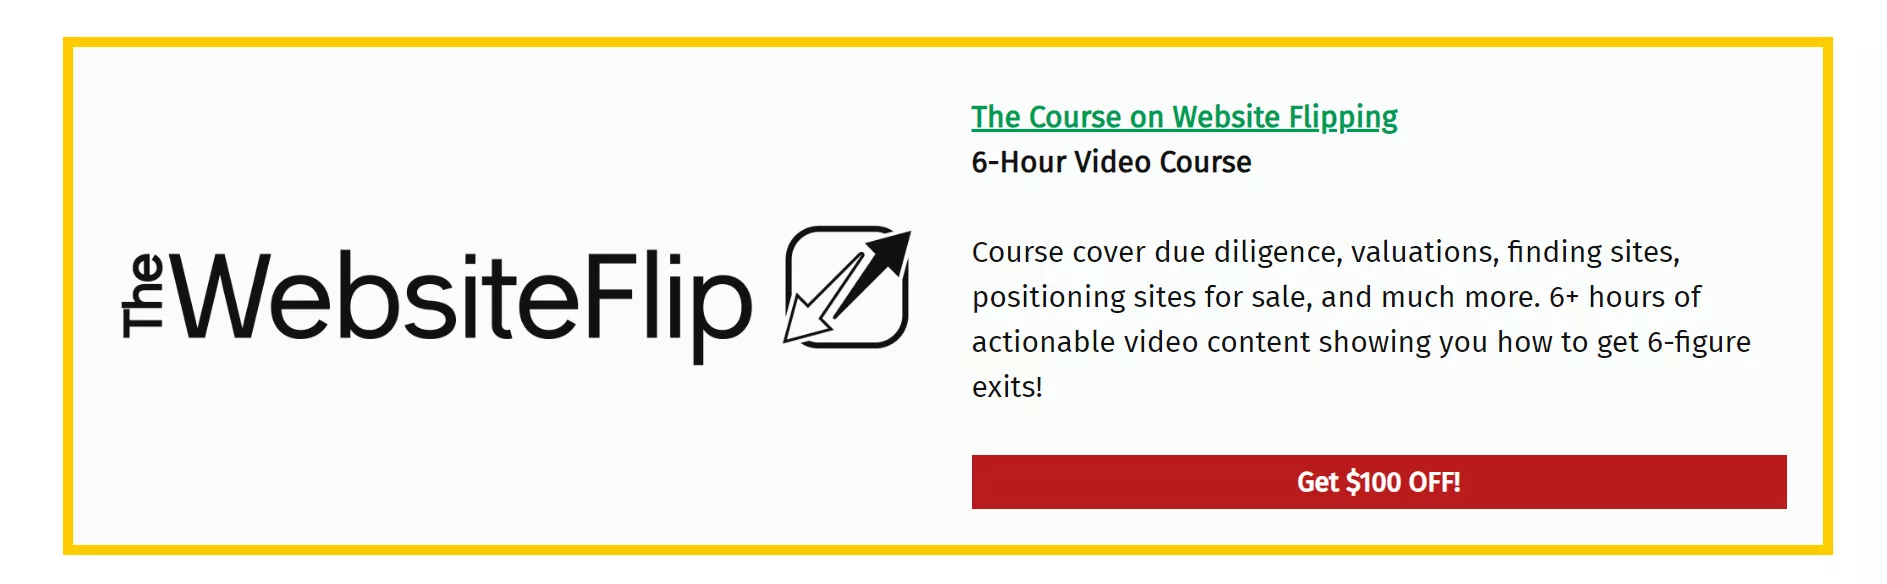 The Website Flip Video Course